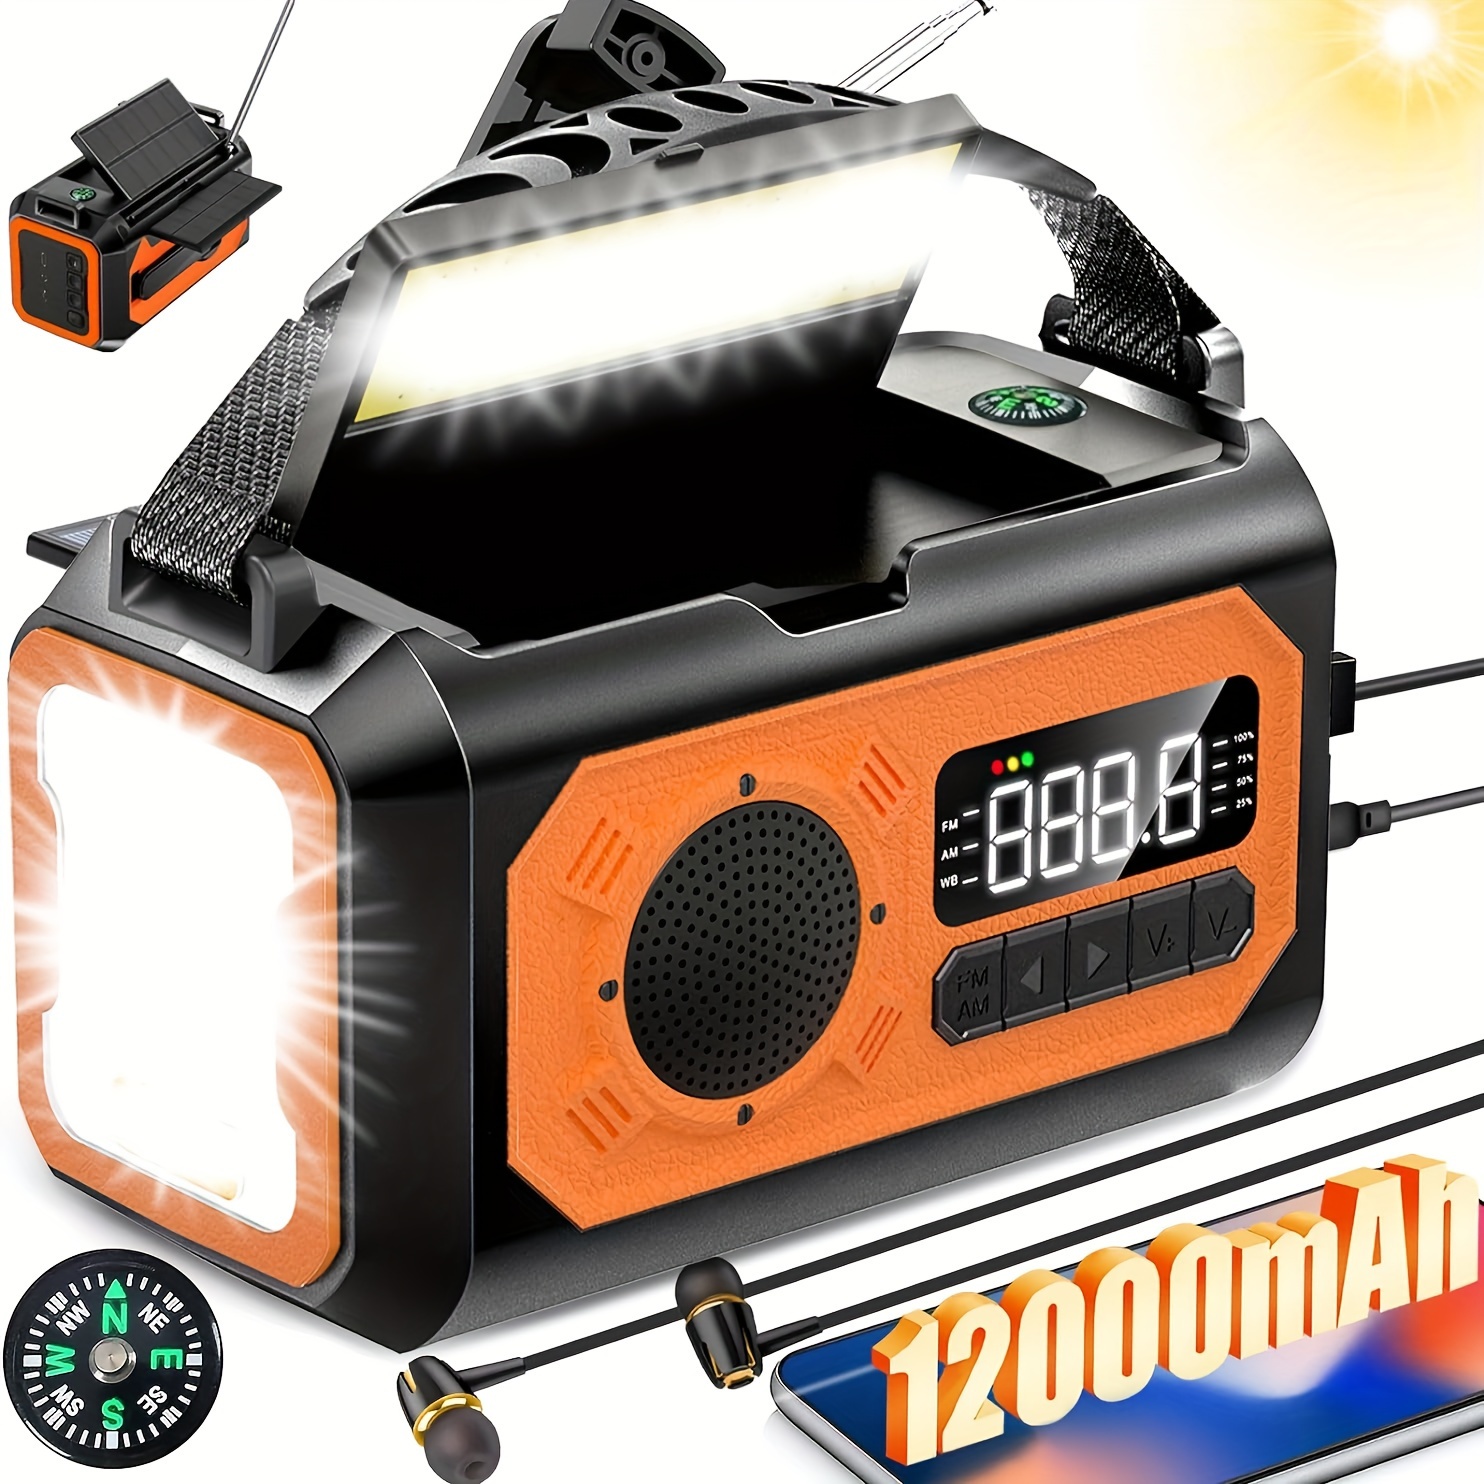 

12000mah Hand Crank Emergency Radio, Am/fm/, Emergency Radio, Multi-function Solar Powered Radio, 2 Solar Panels, Usb Type-c Charging, Torch & Led Reading Lamp, Sos Alarm, Compass